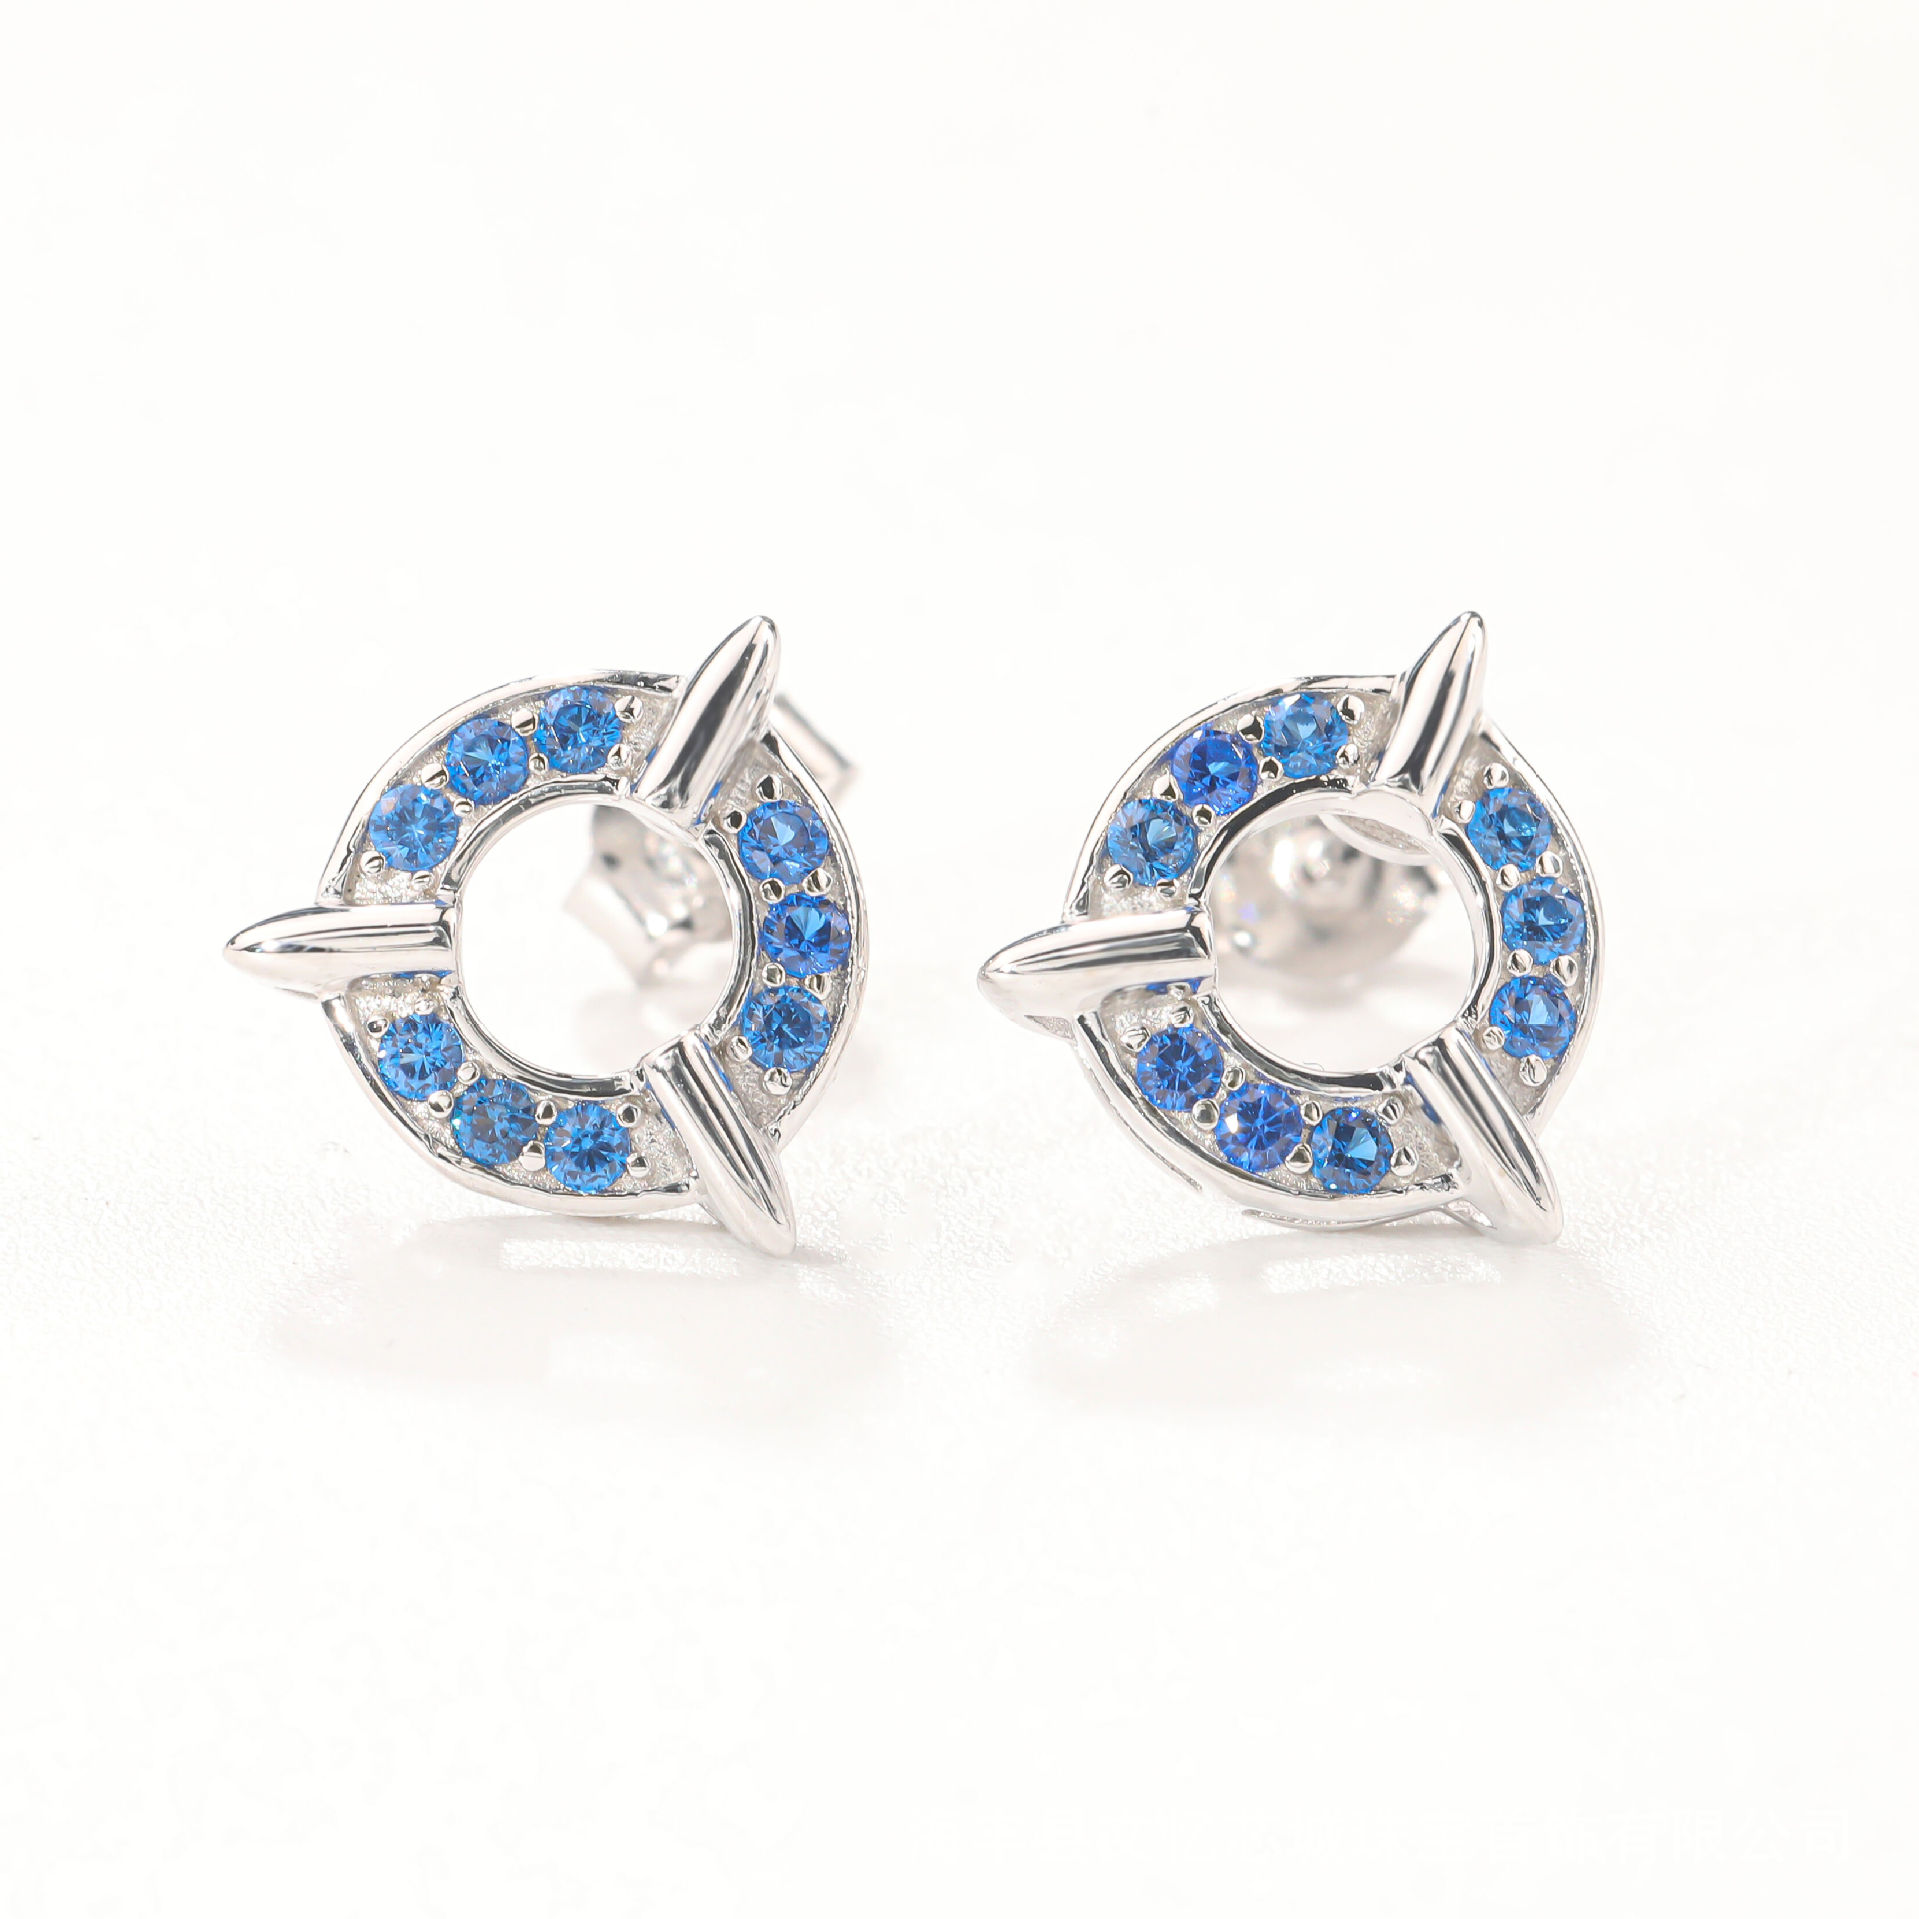 Artificial gemstone ring design S925 sterling silver earrings